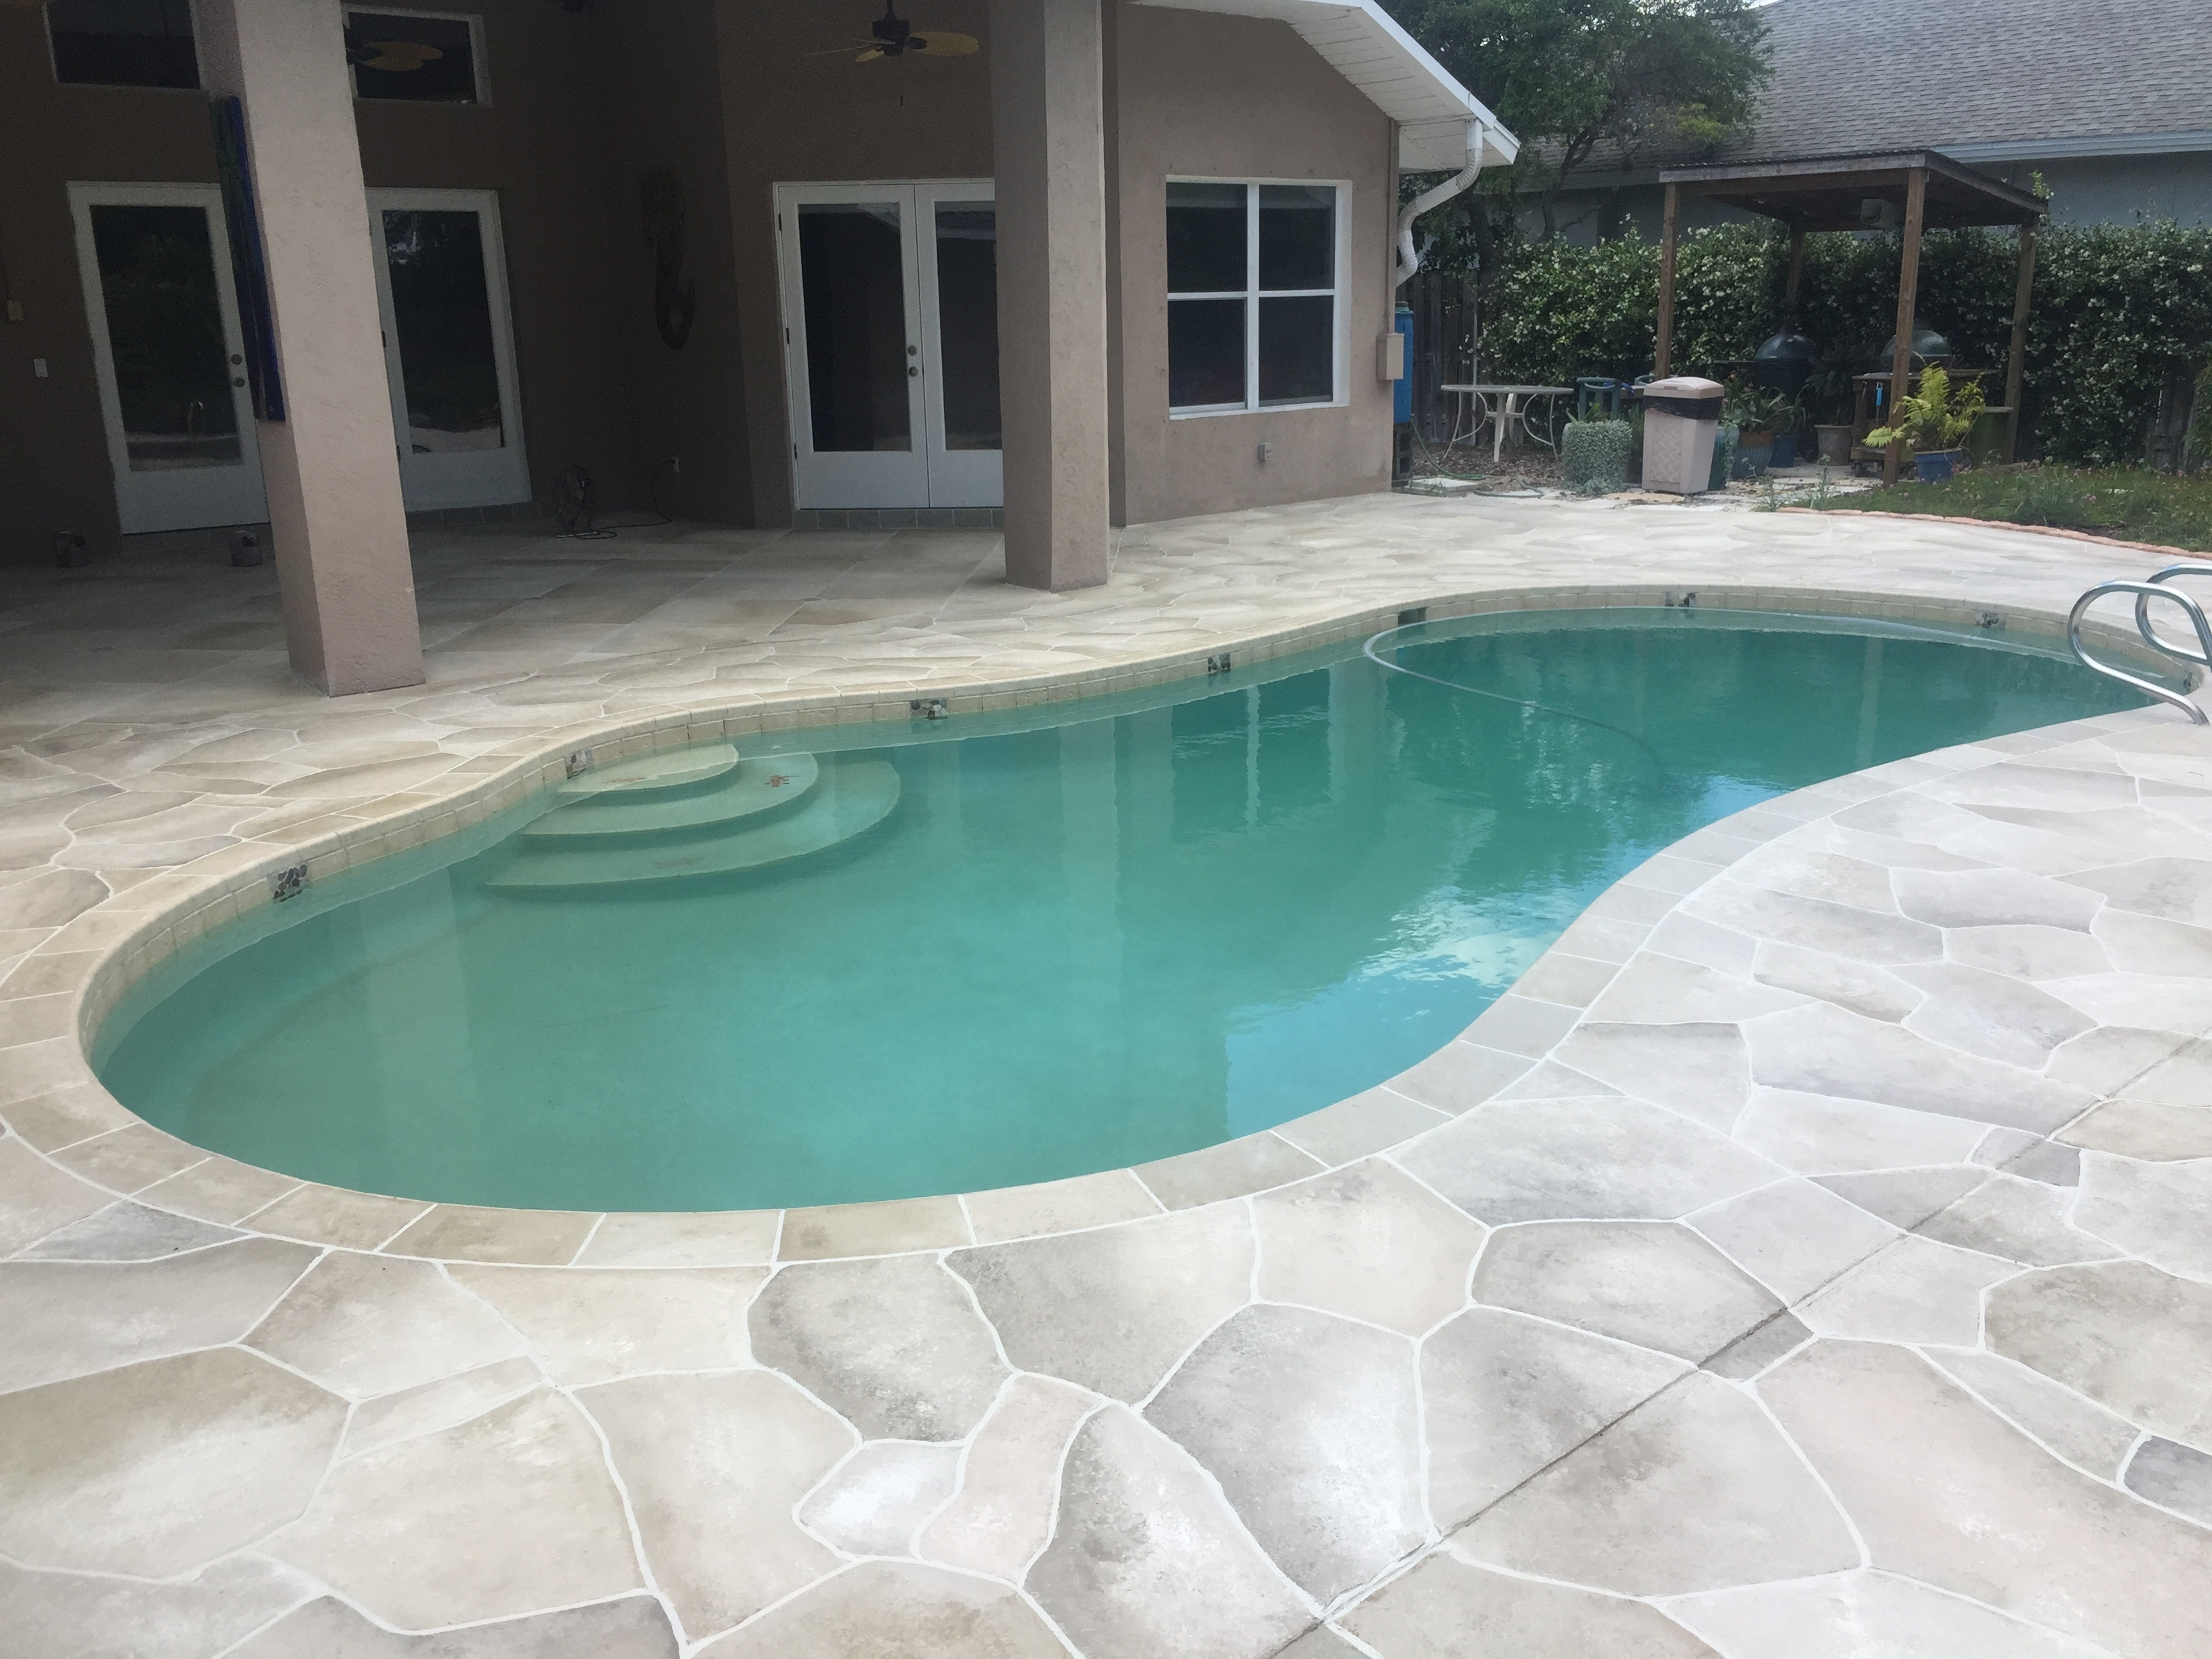 Concrete Designs Florida Travertine Pool Deck Florida Interlocking with dimensions 3264 X 2448